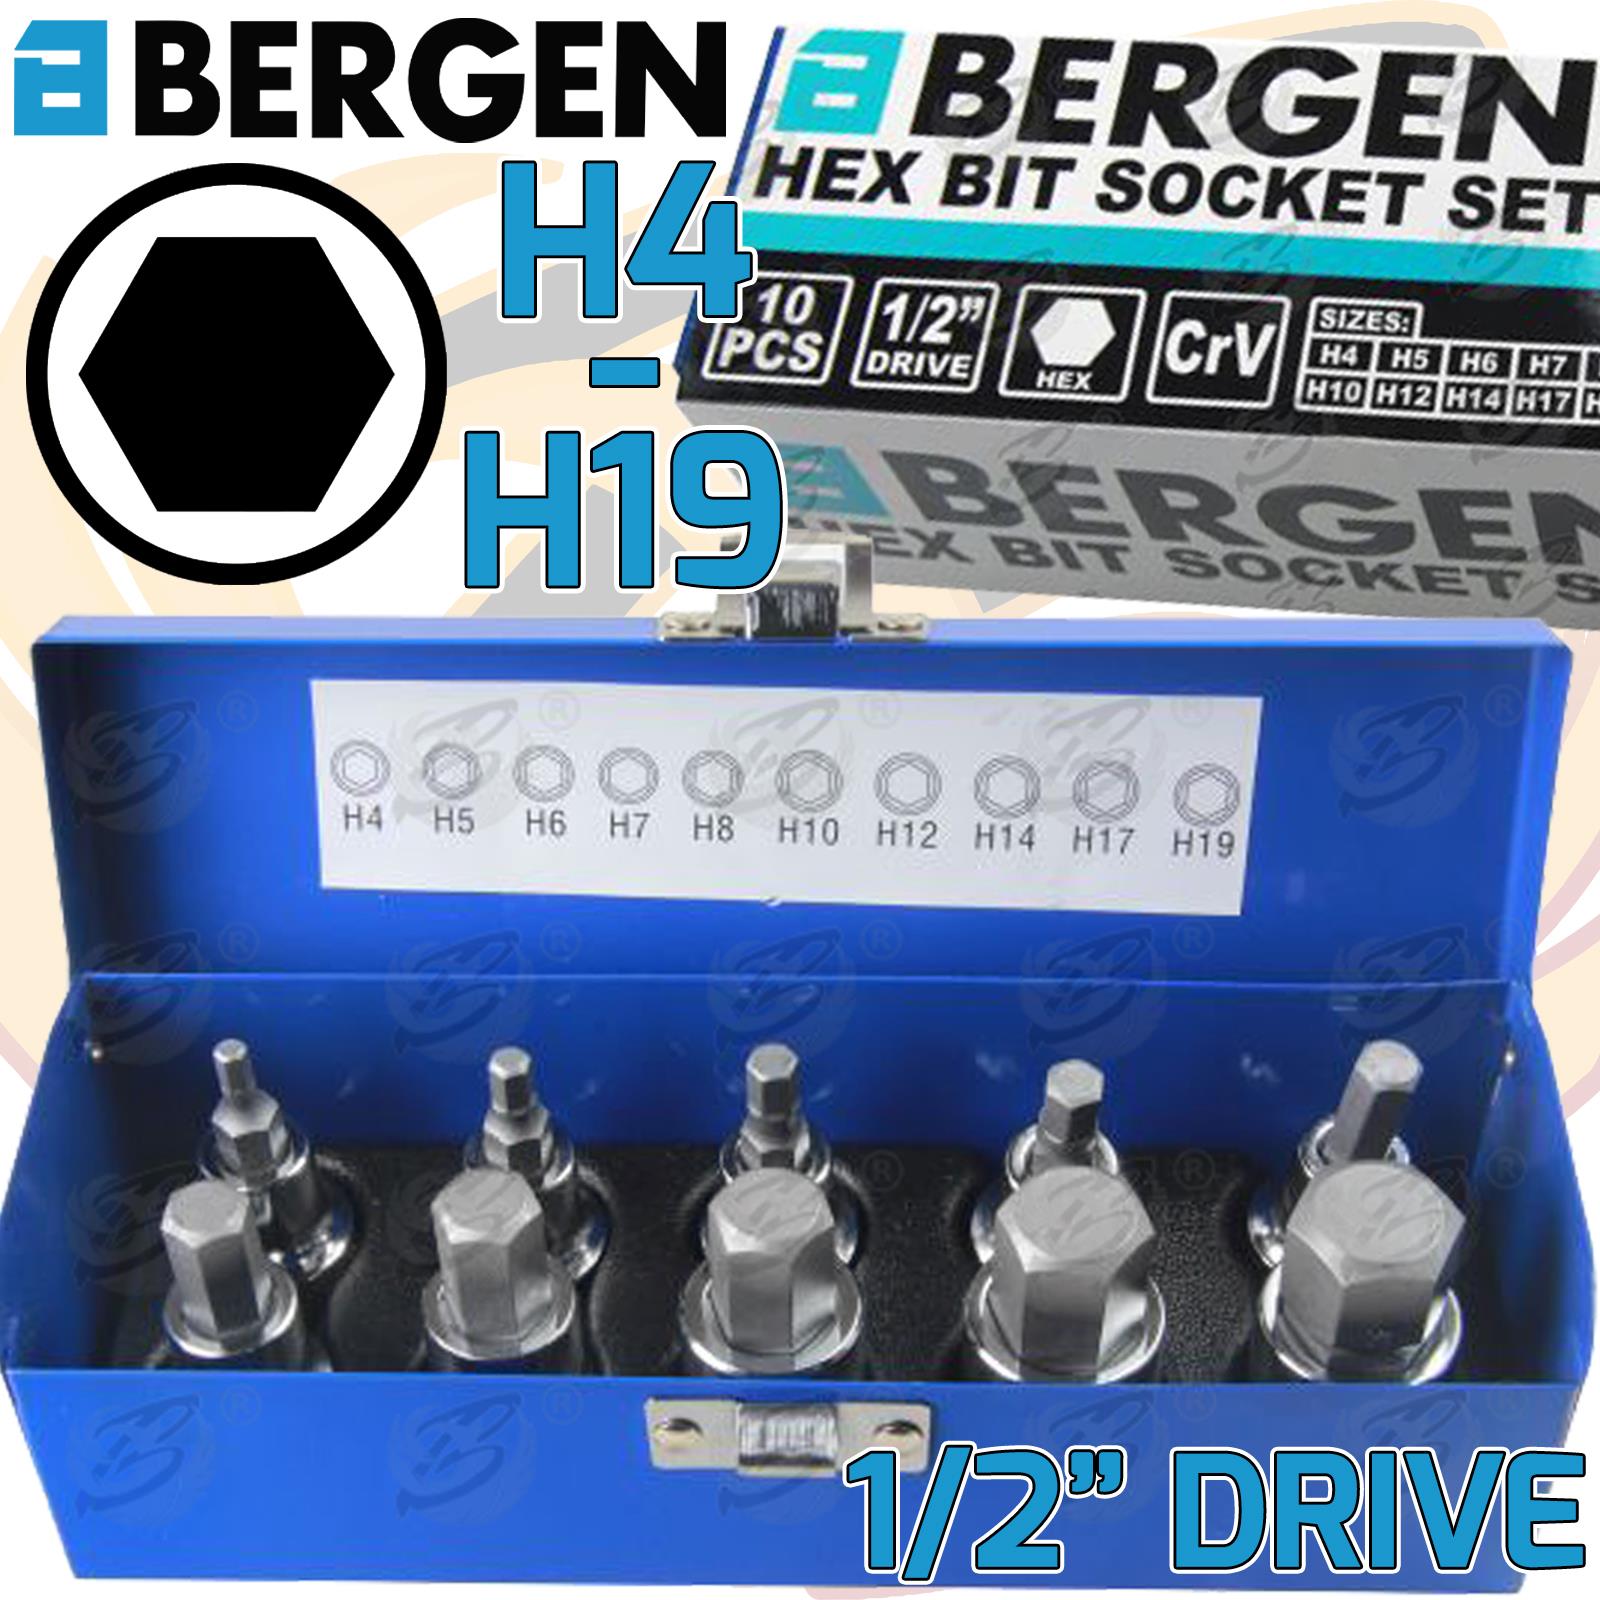 BERGEN 10PCS 1/2" DRIVE HEX BIT SOCKETS H4 - H19